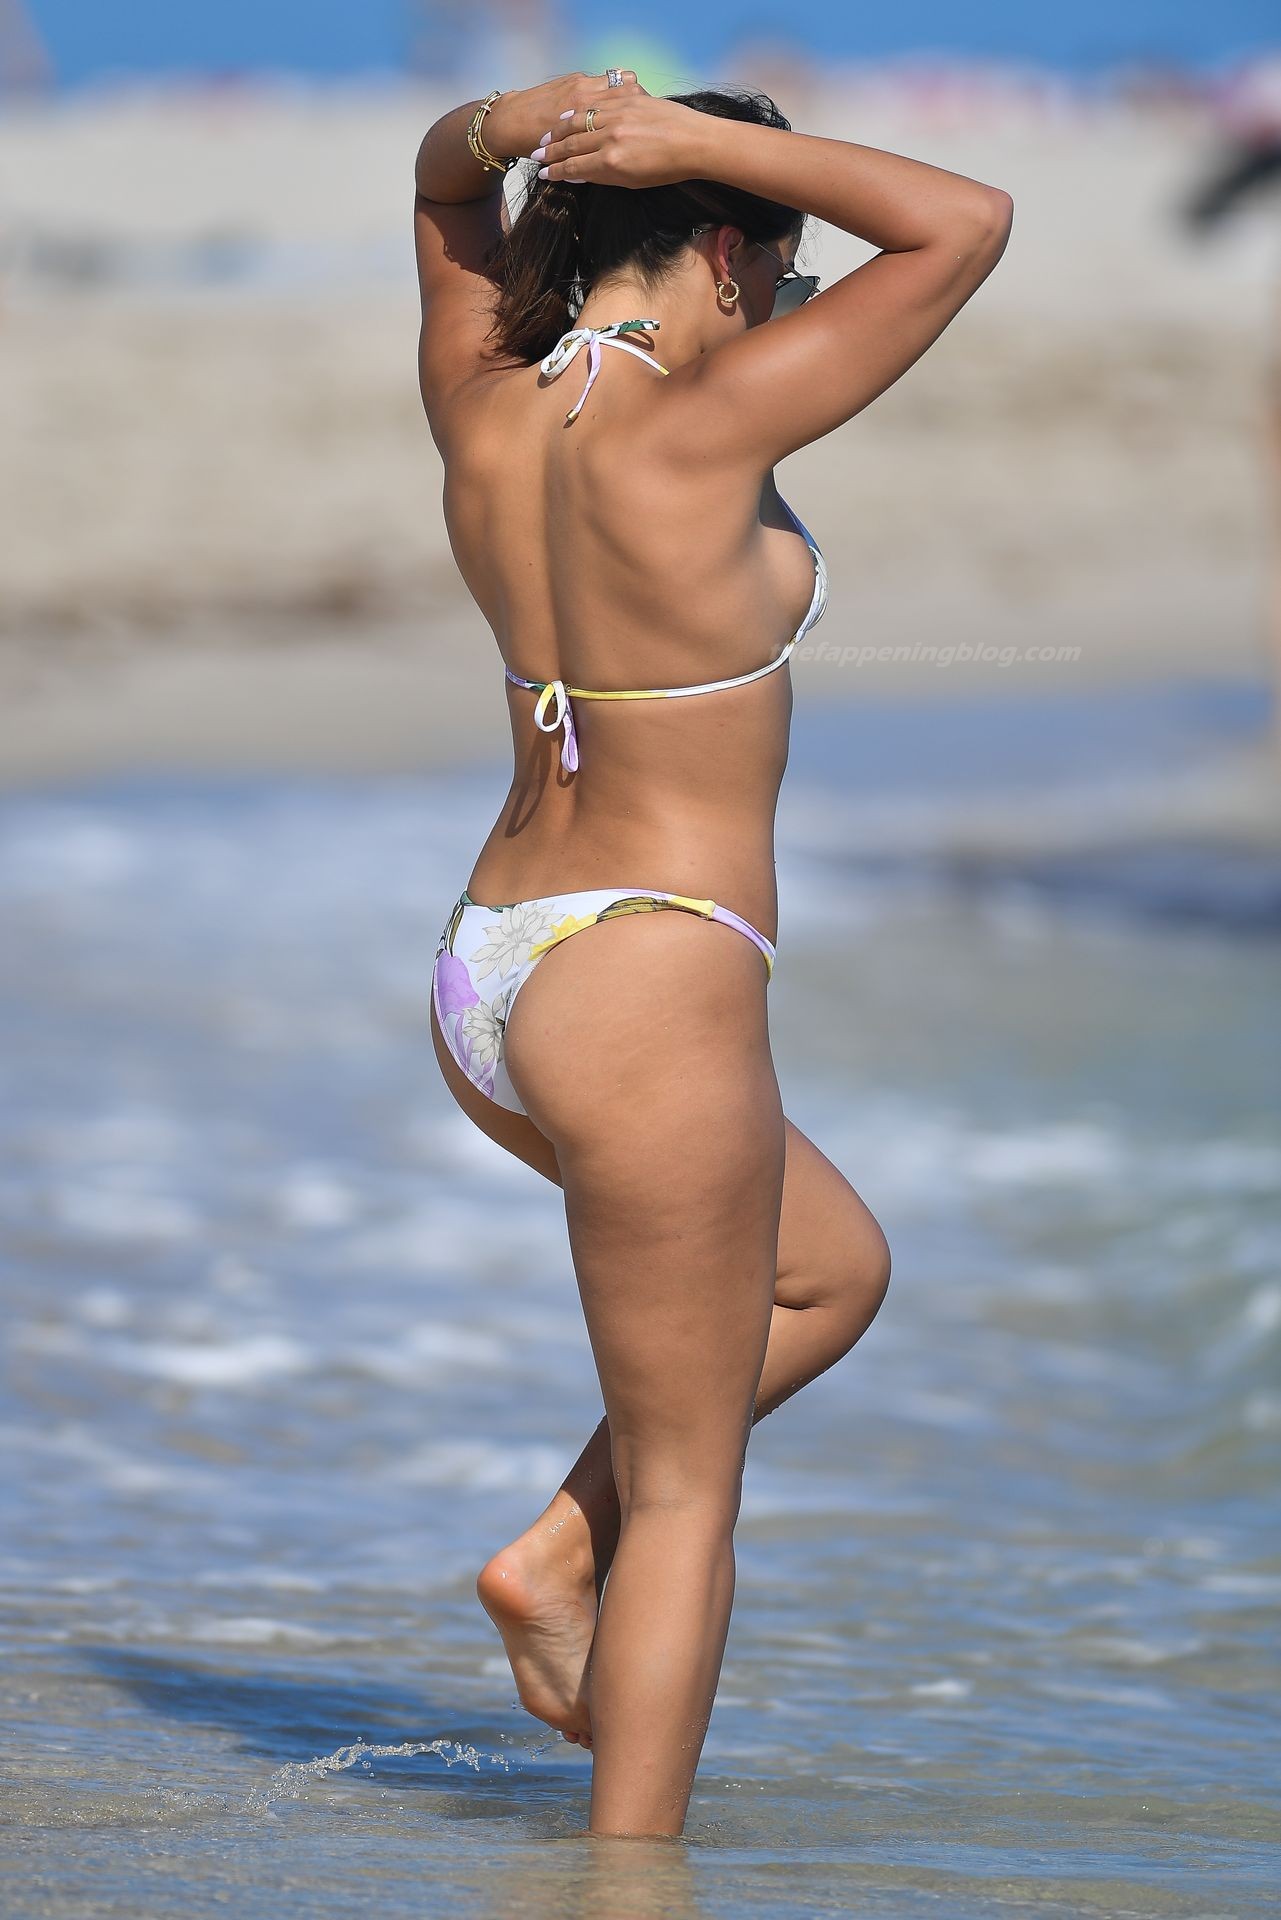 Brooks Nader Shows Off Her Sexy Bikini Body on the Beach (108 Photos)